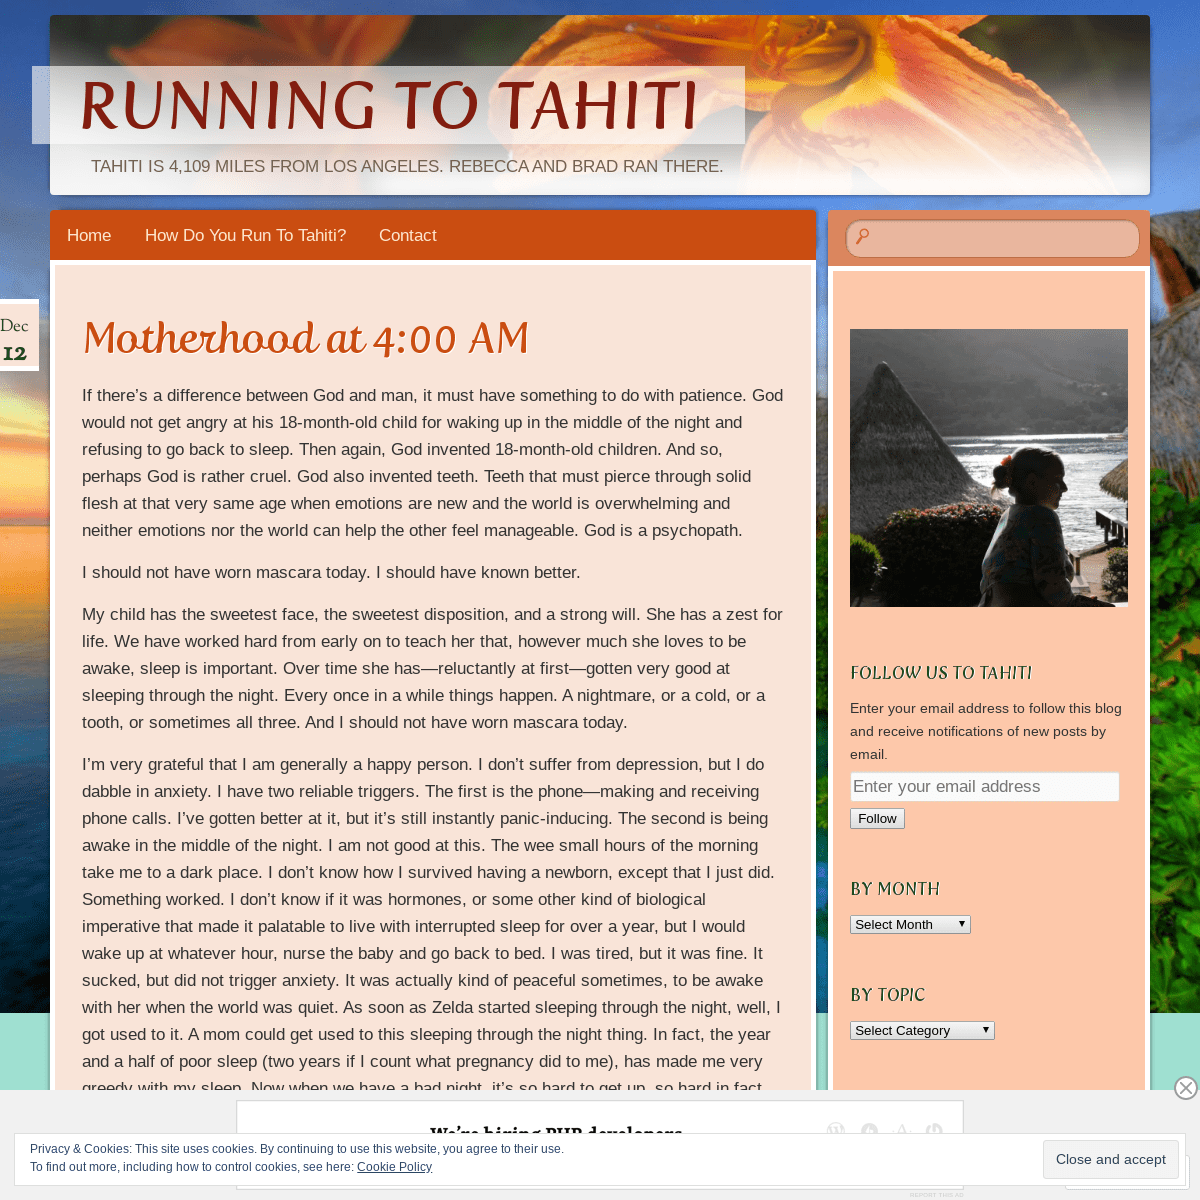 A complete backup of runningtotahiti.com